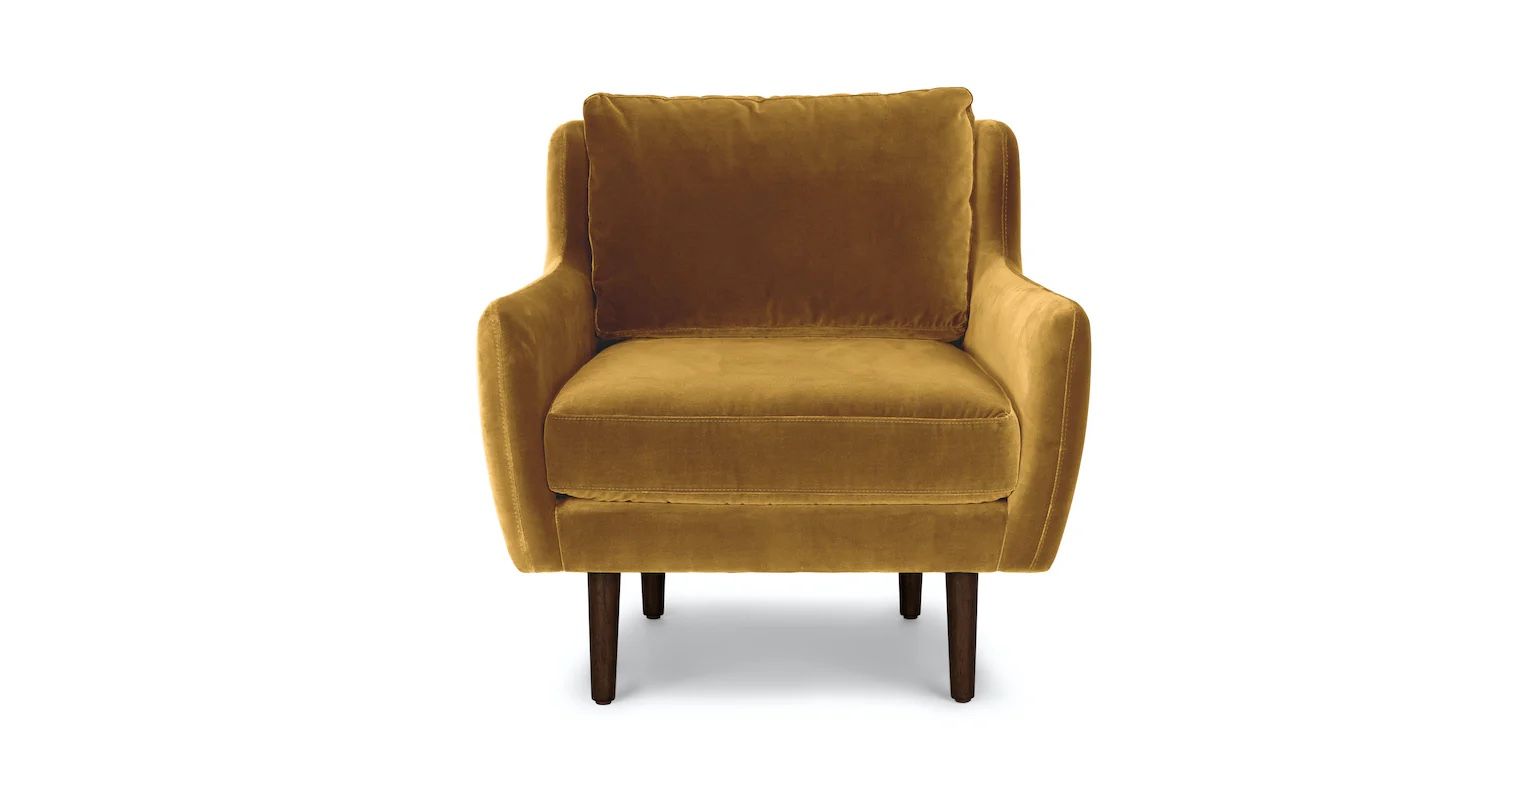 Article Matrix Yarrow Gold Lounge Chair 